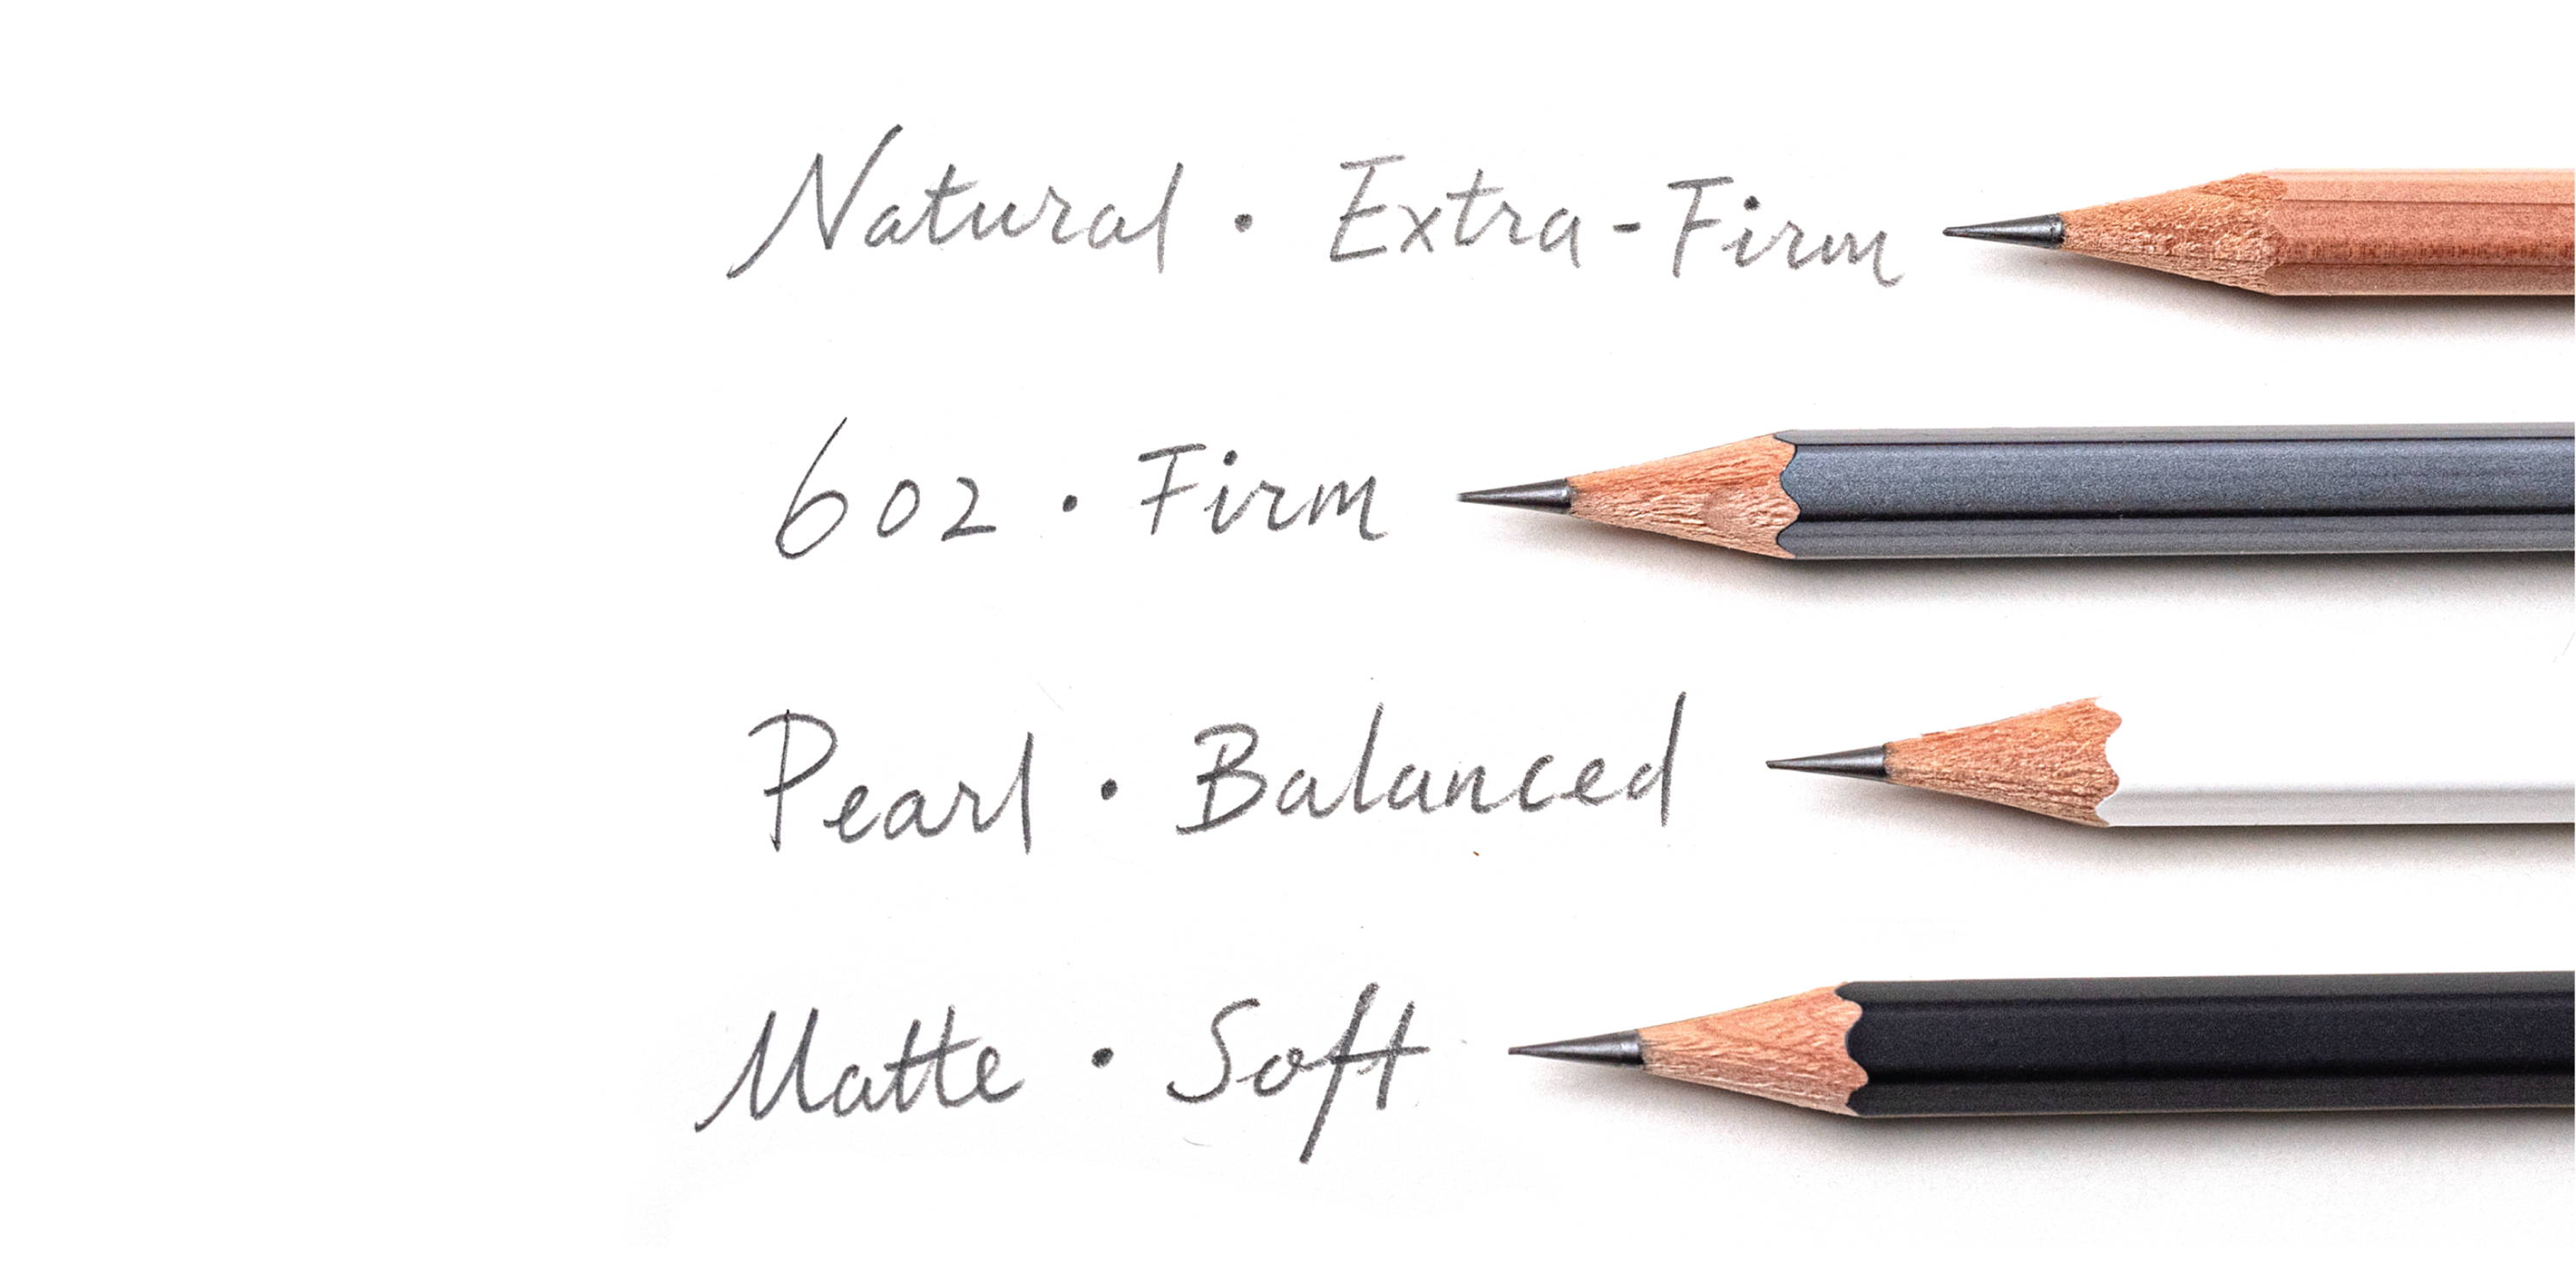 Blackwing Audition Pack - Set of 4 Pencils